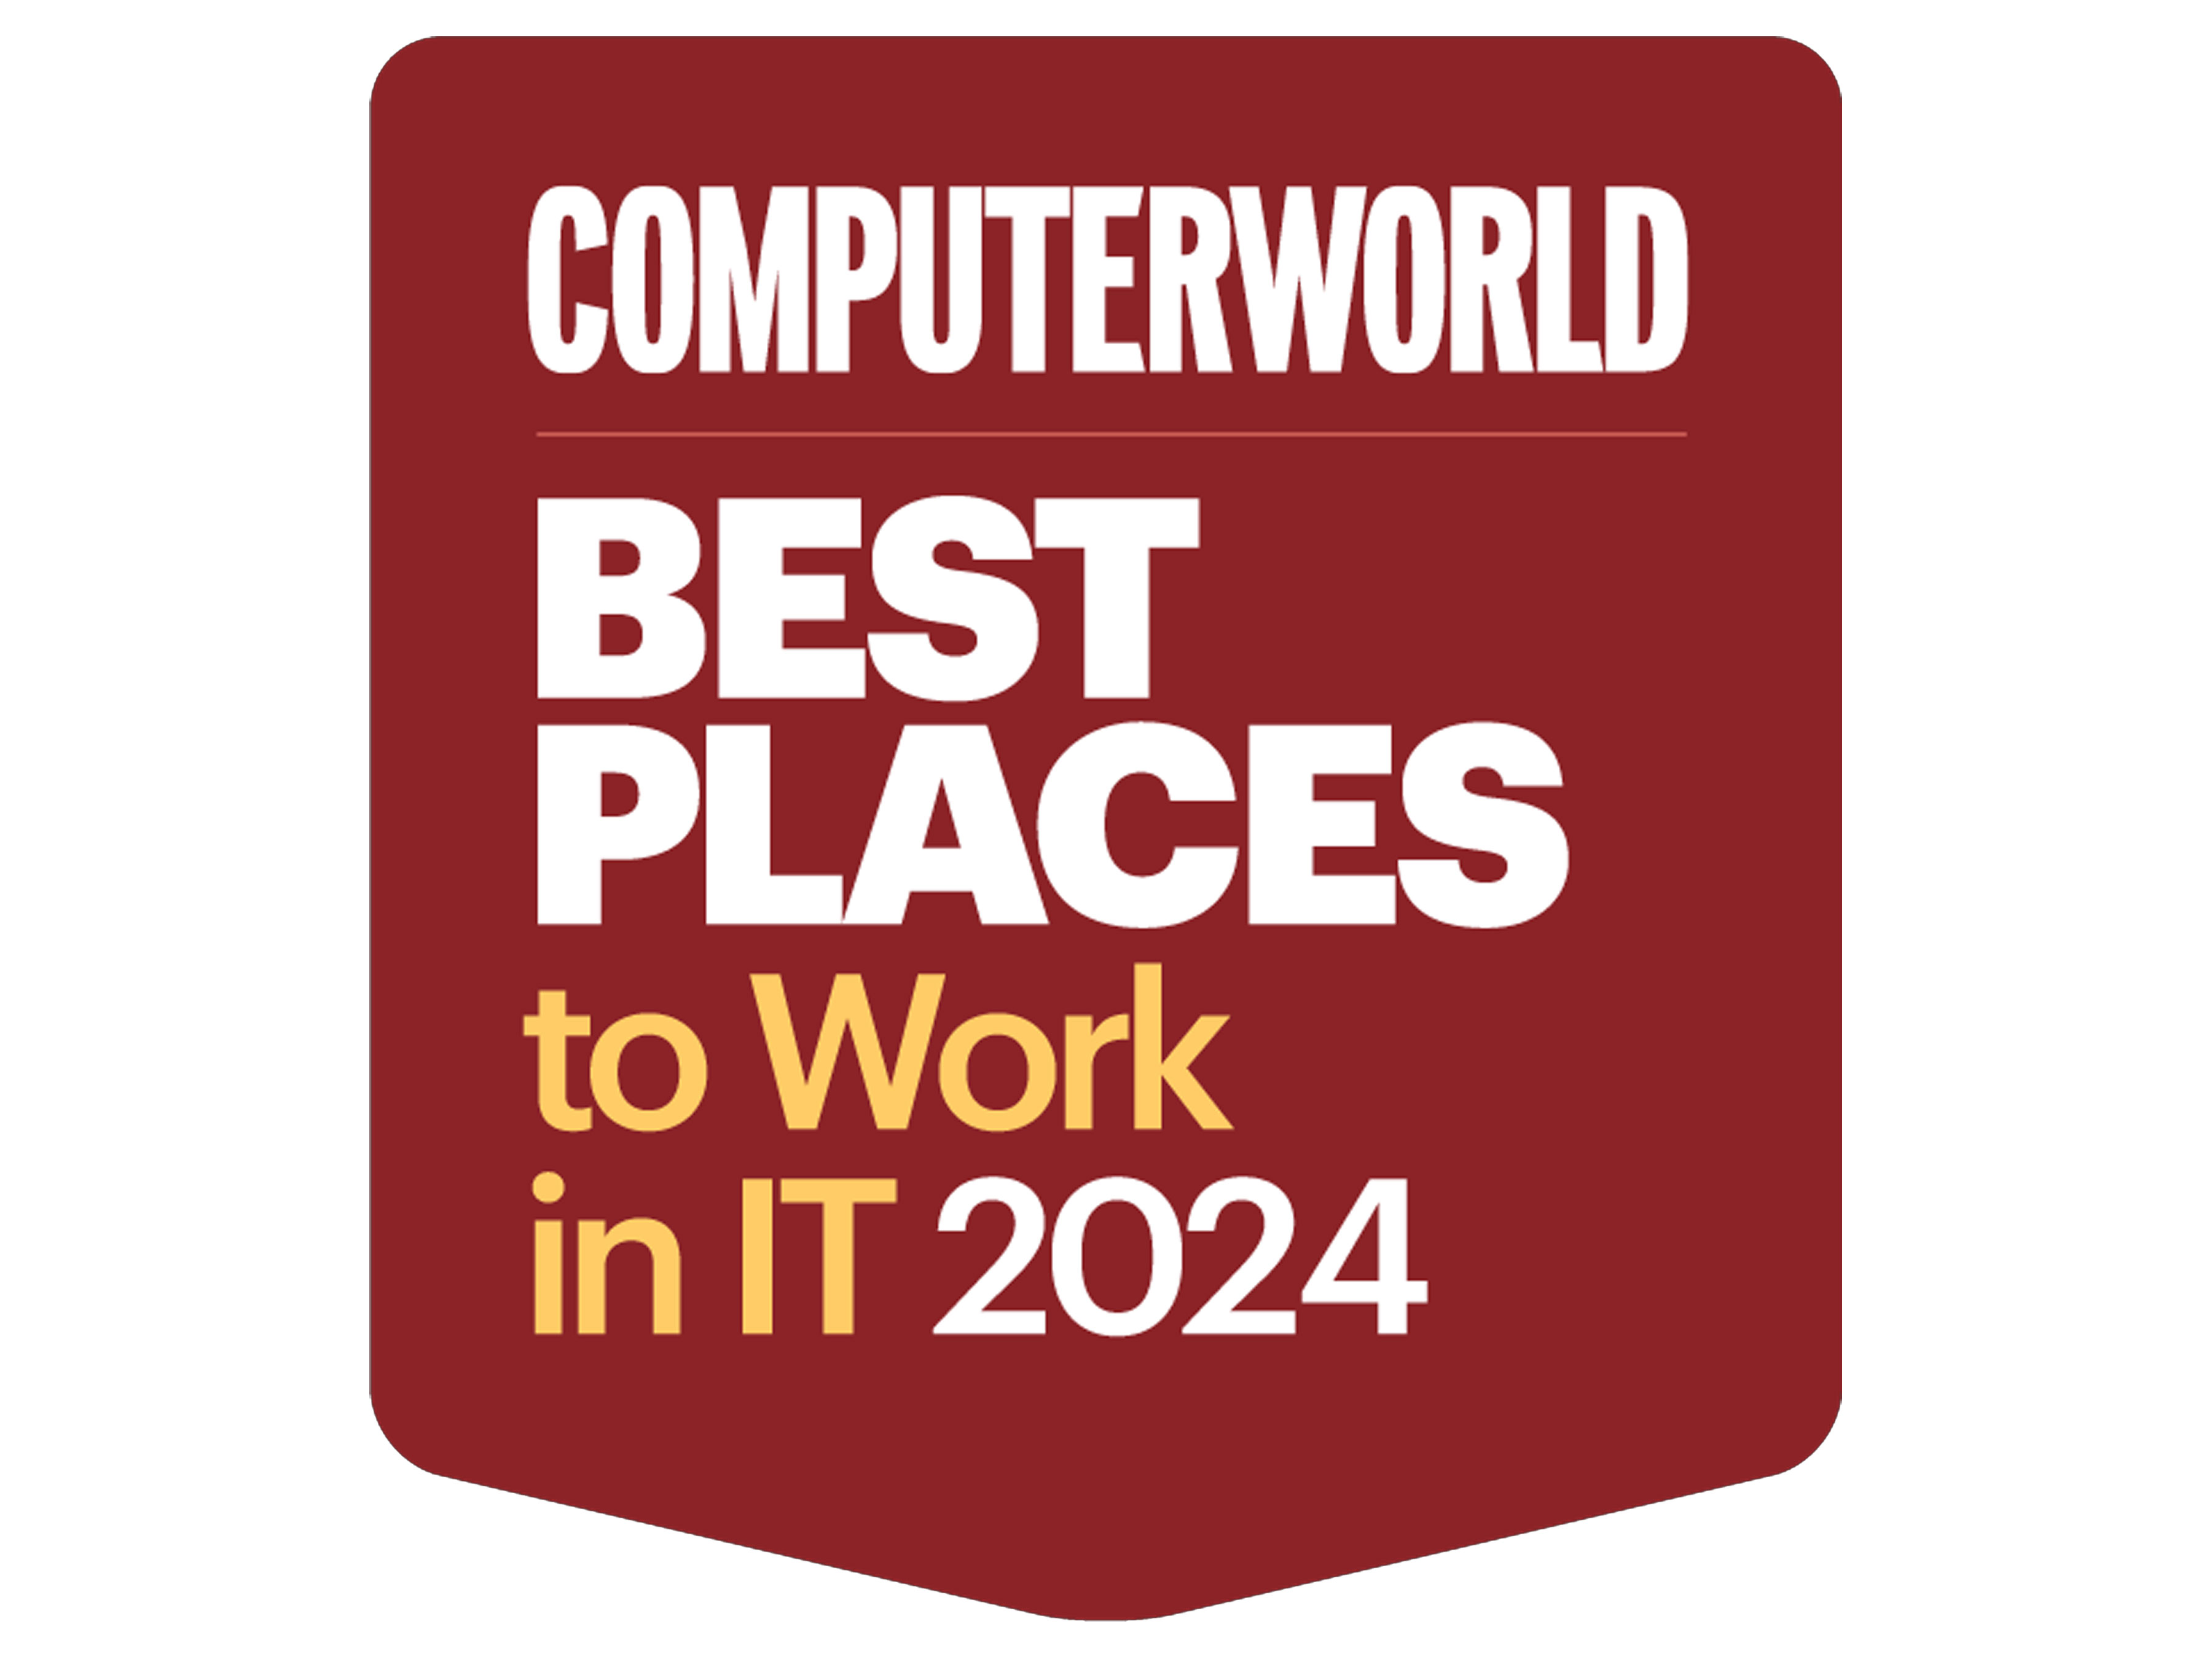 Computerworld Names Zebra Best Place to Work in IT